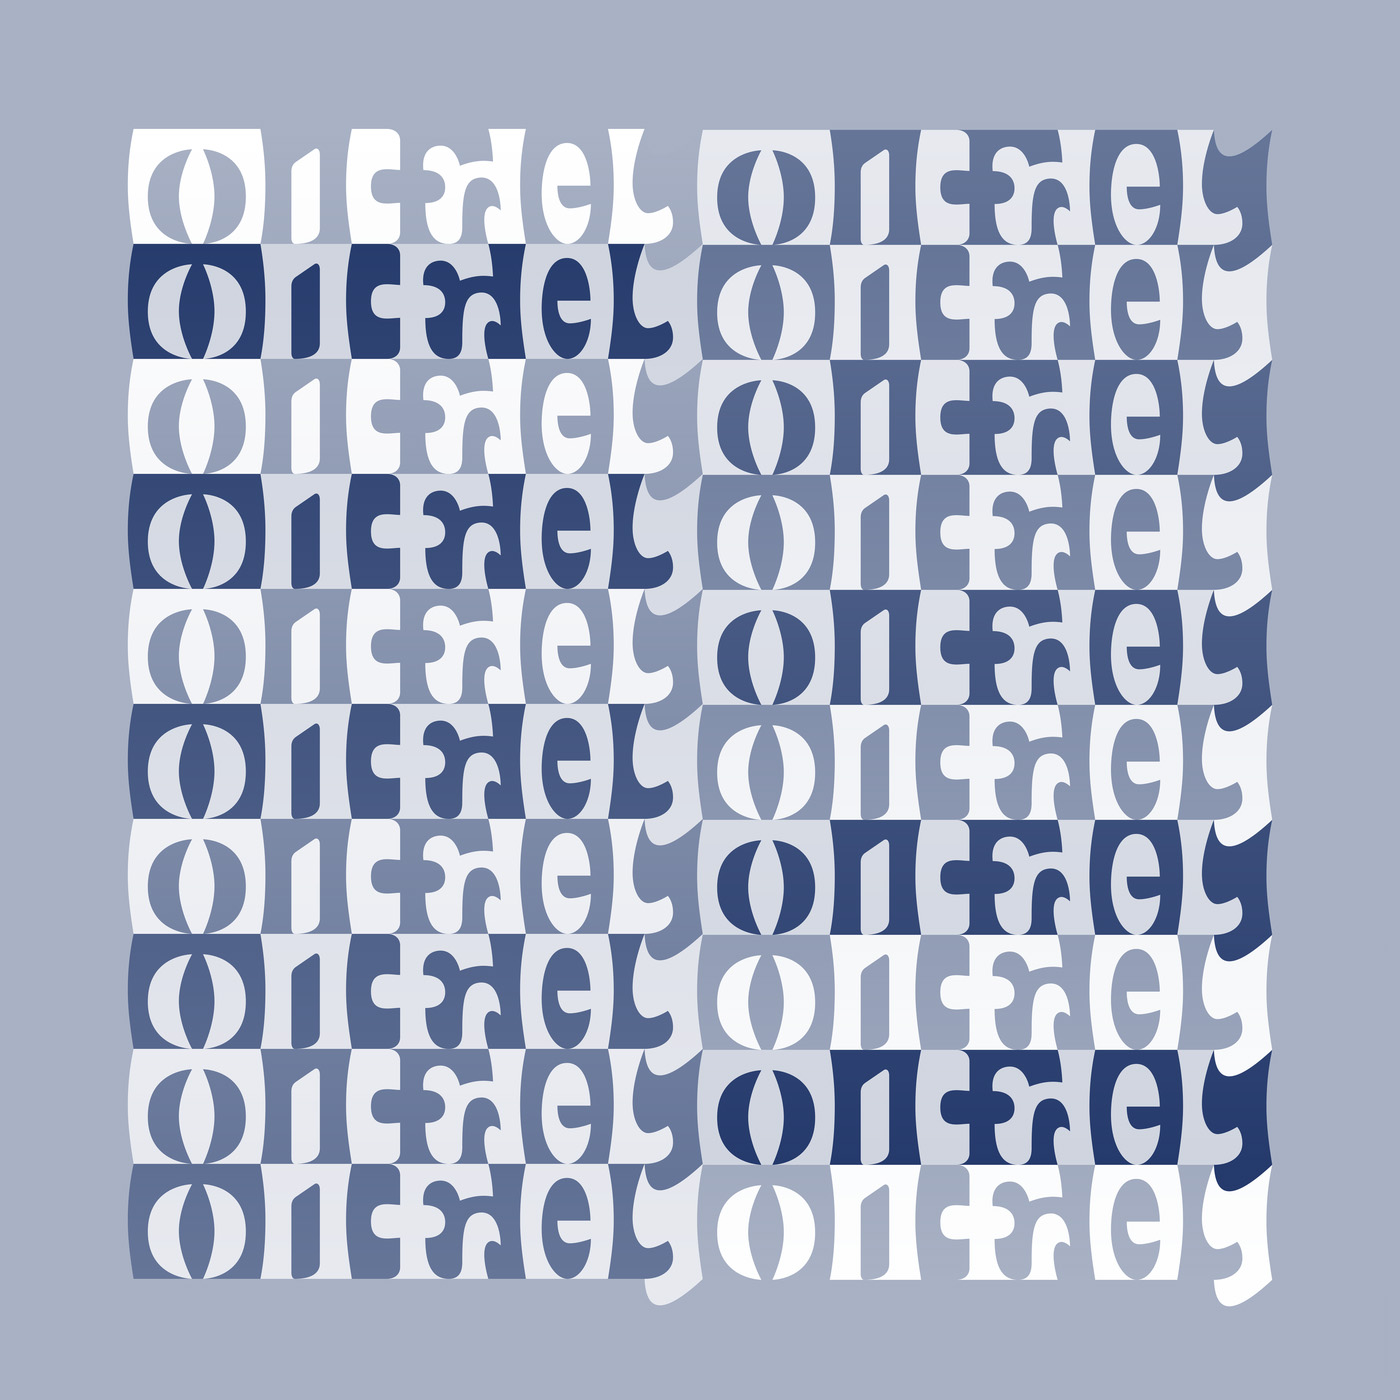 ambigramme Michel Onfray (tessellation)